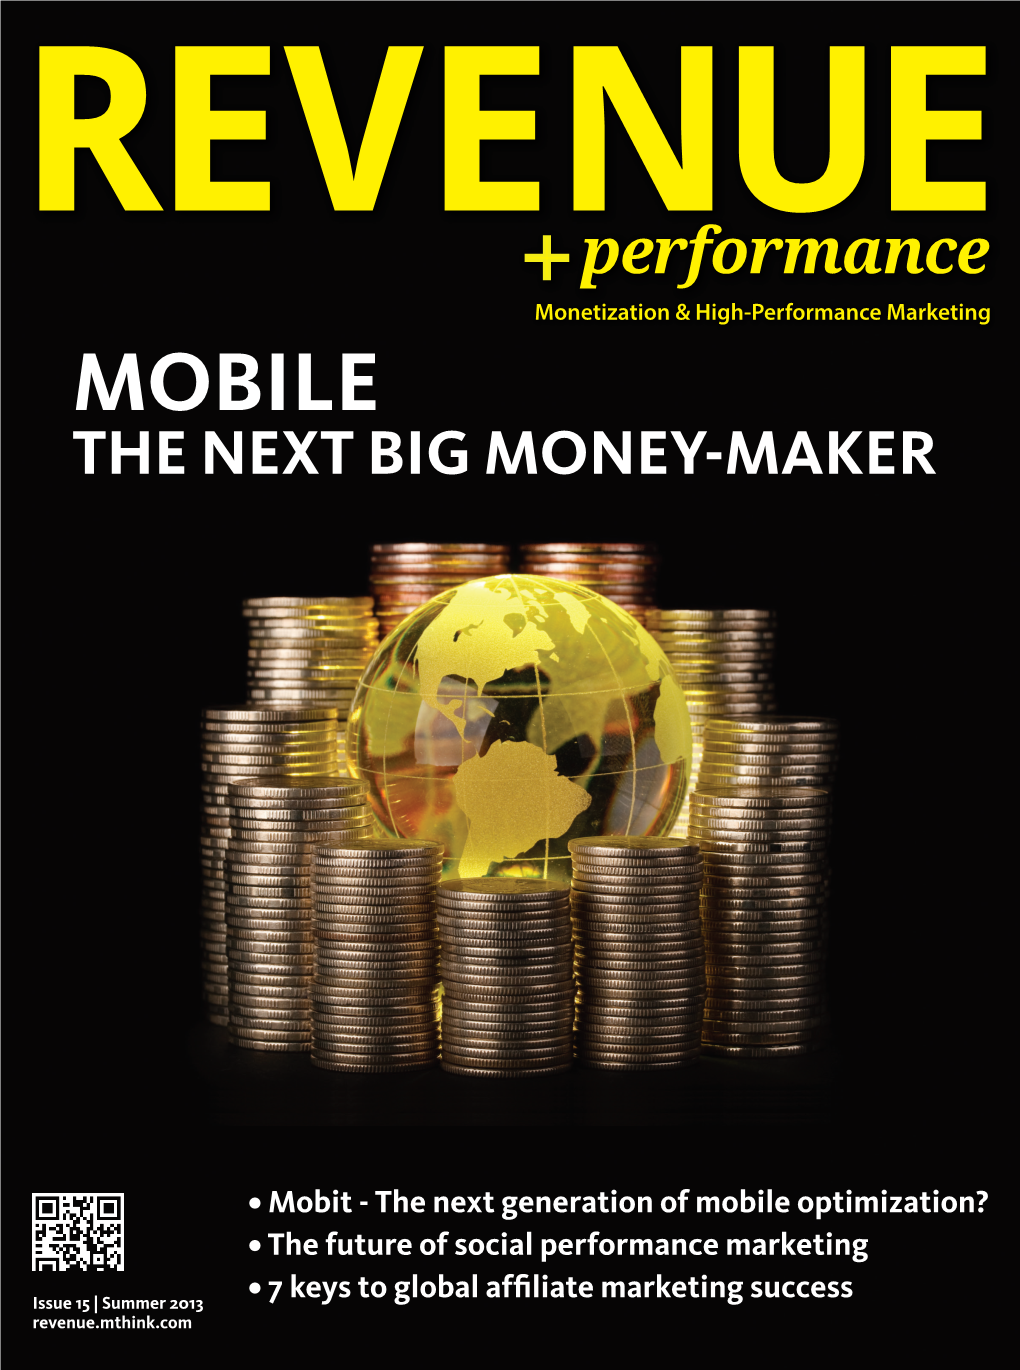 Mobile the Next Big Money-Maker